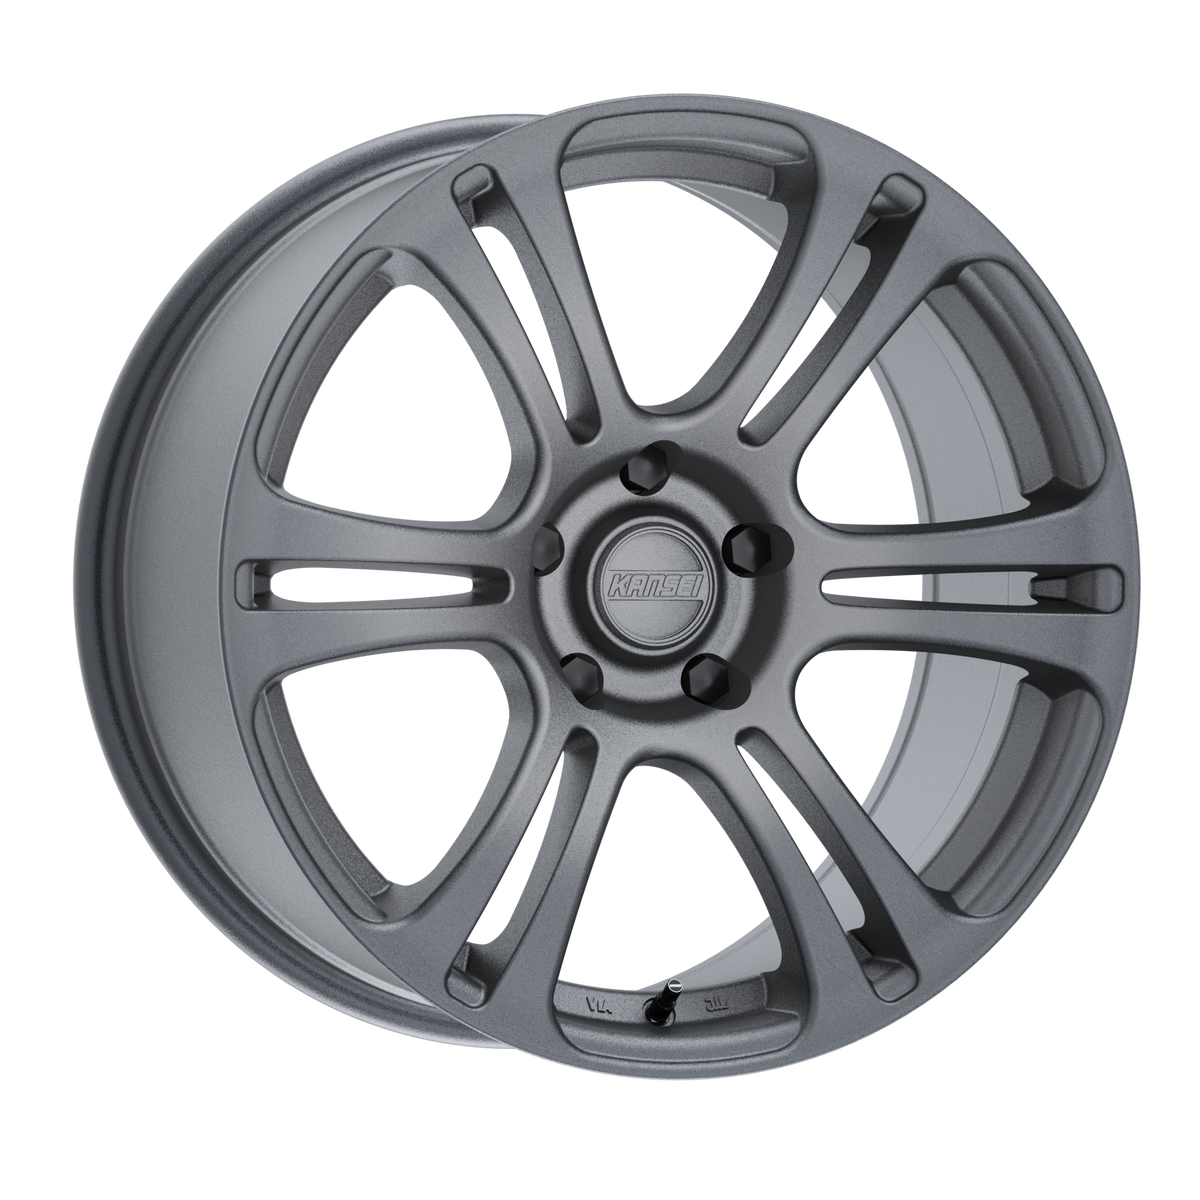 K16G NEO Wheel, Size: 18" x 10.50", Bolt Pattern: 5 x 112 mm, Backspace: 6.62" [Finish: Gunmetal]